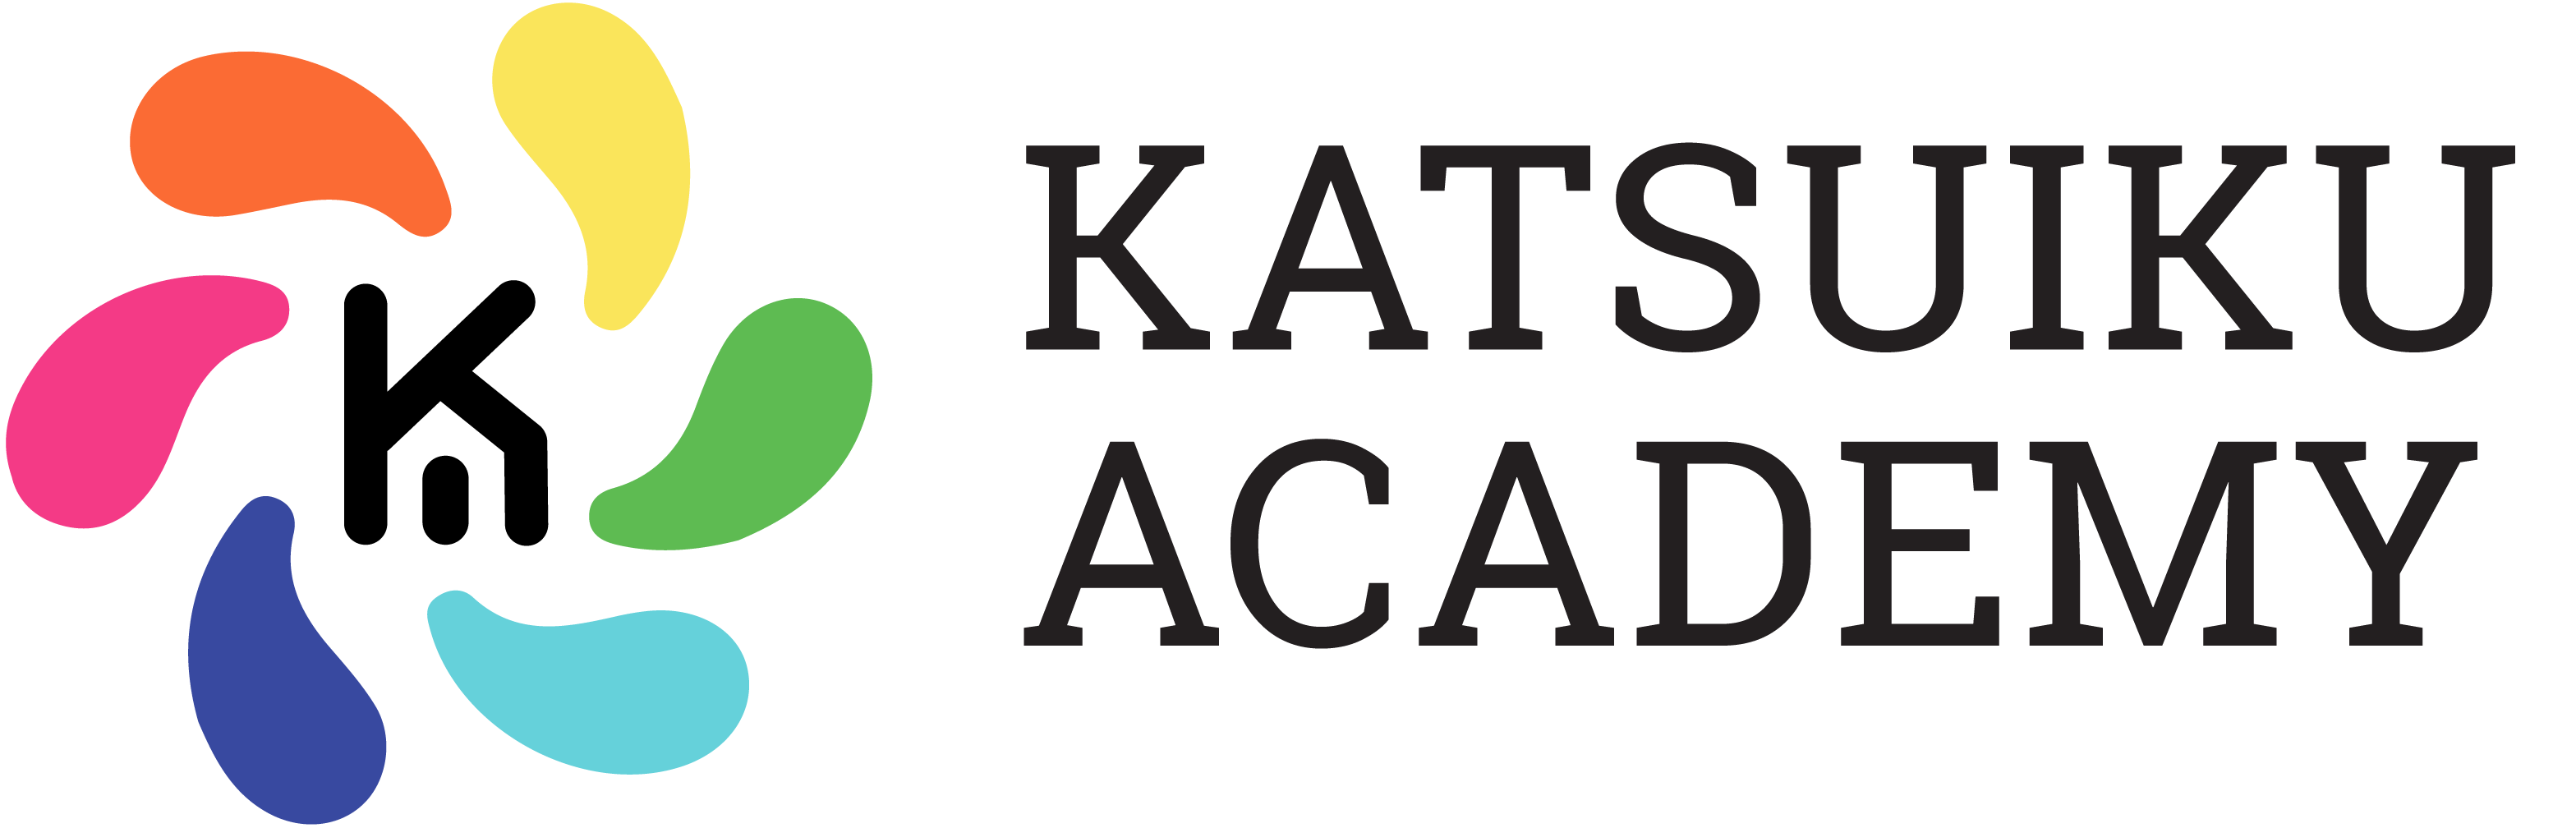 Katsuiku Academy